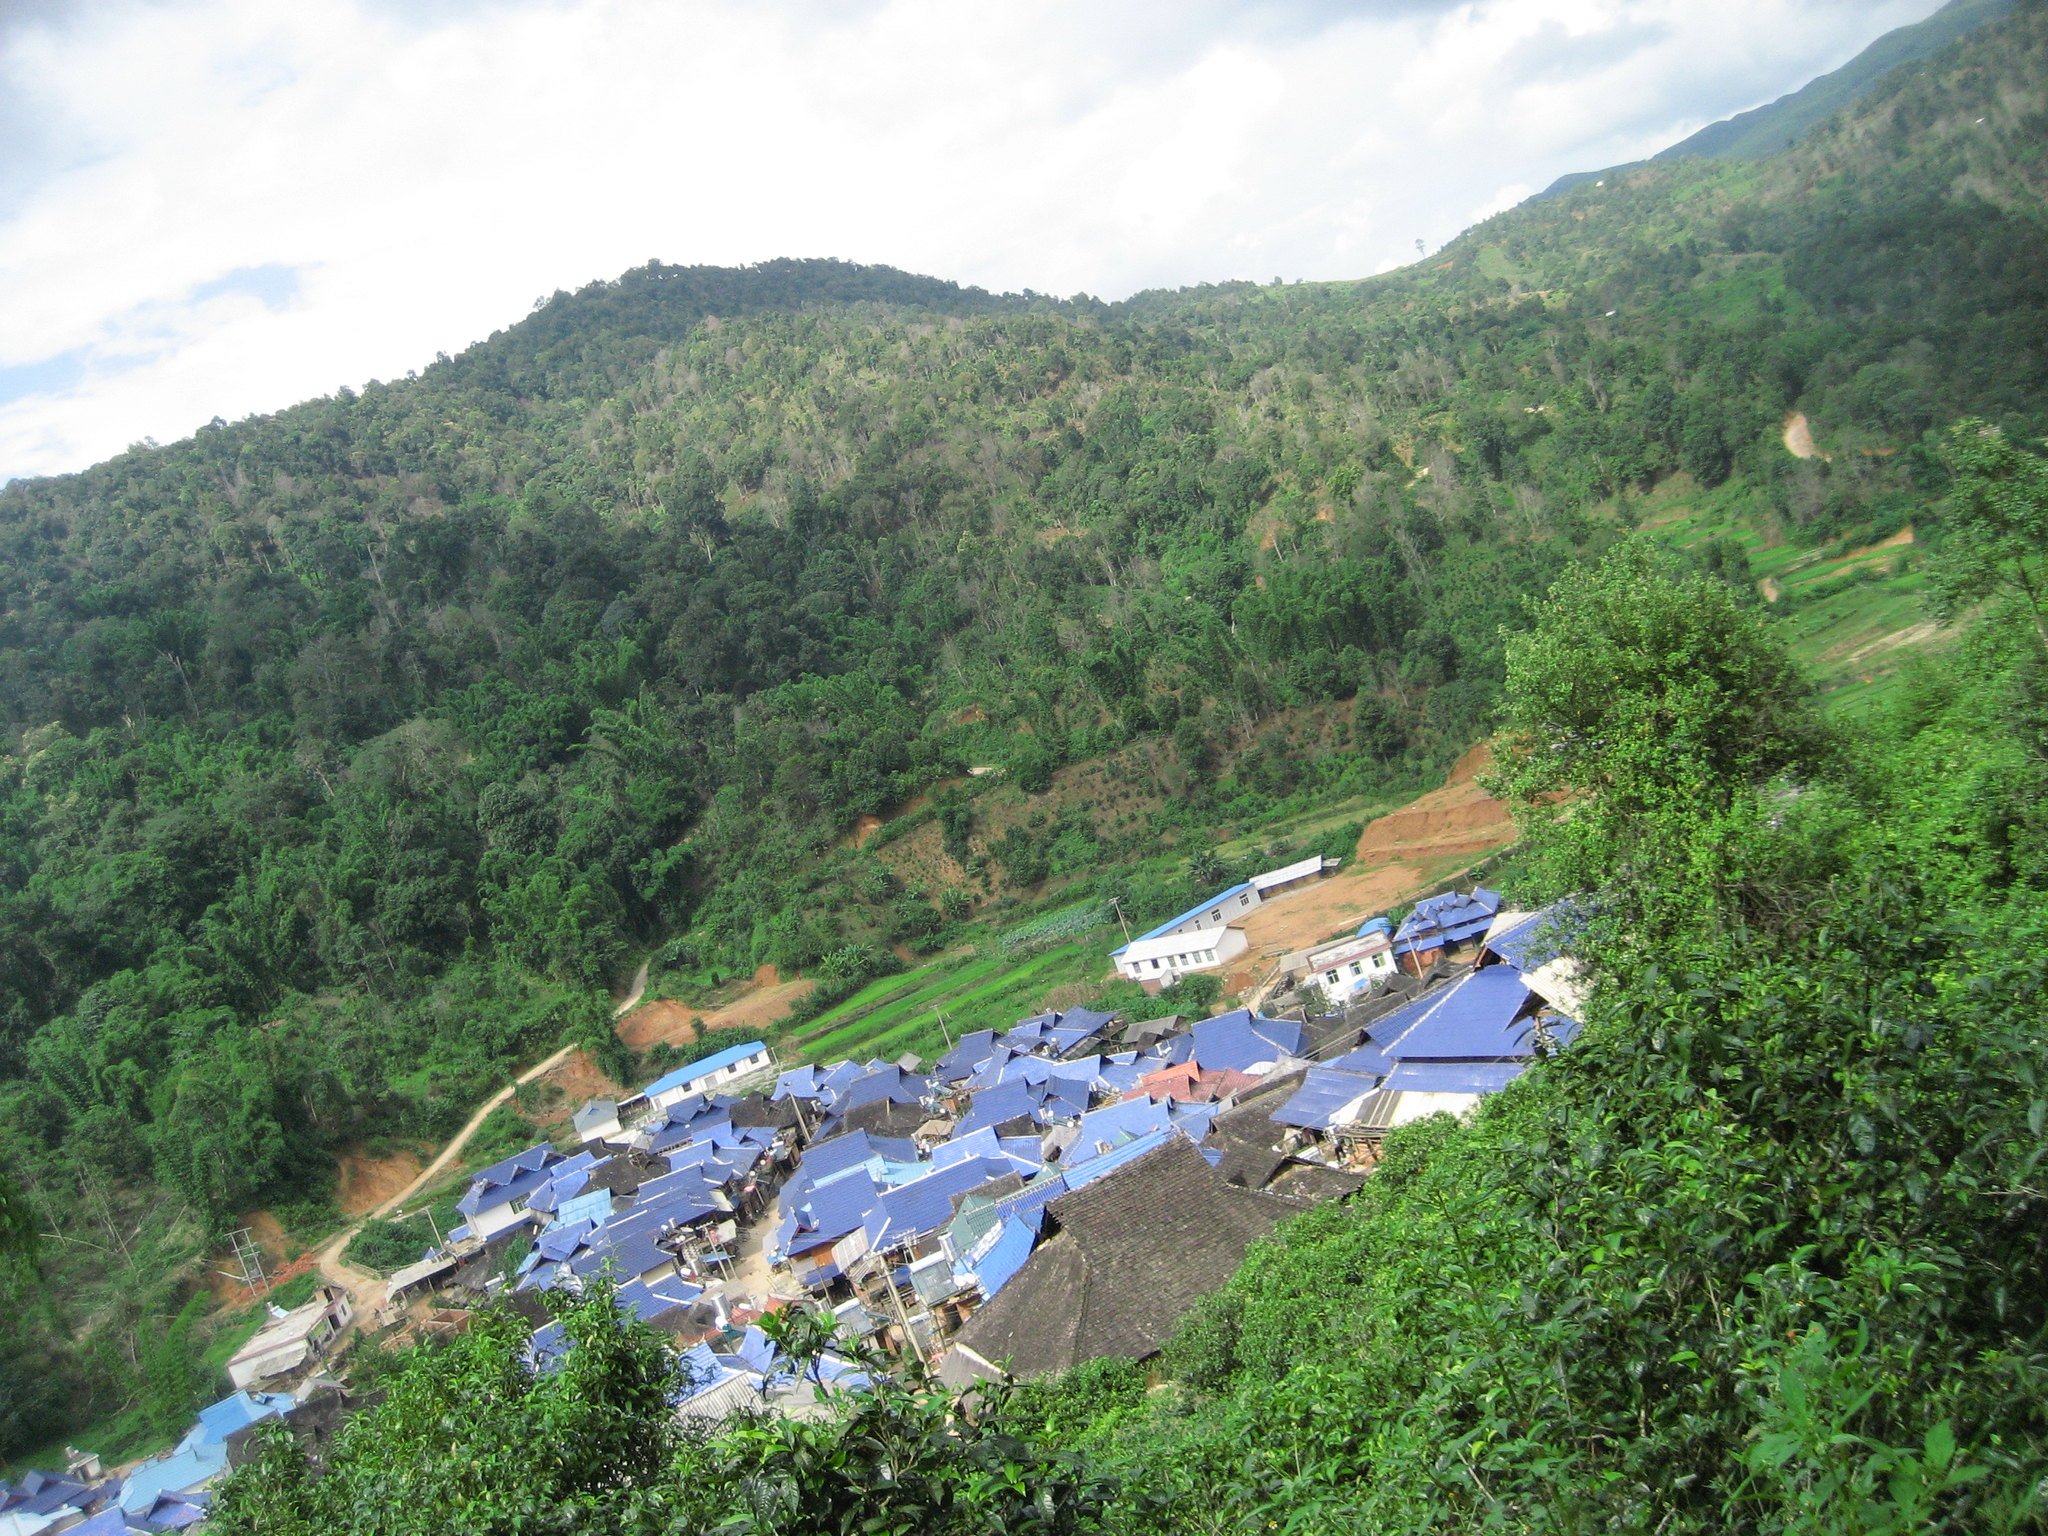 View of a Local Village Near Tea Trees